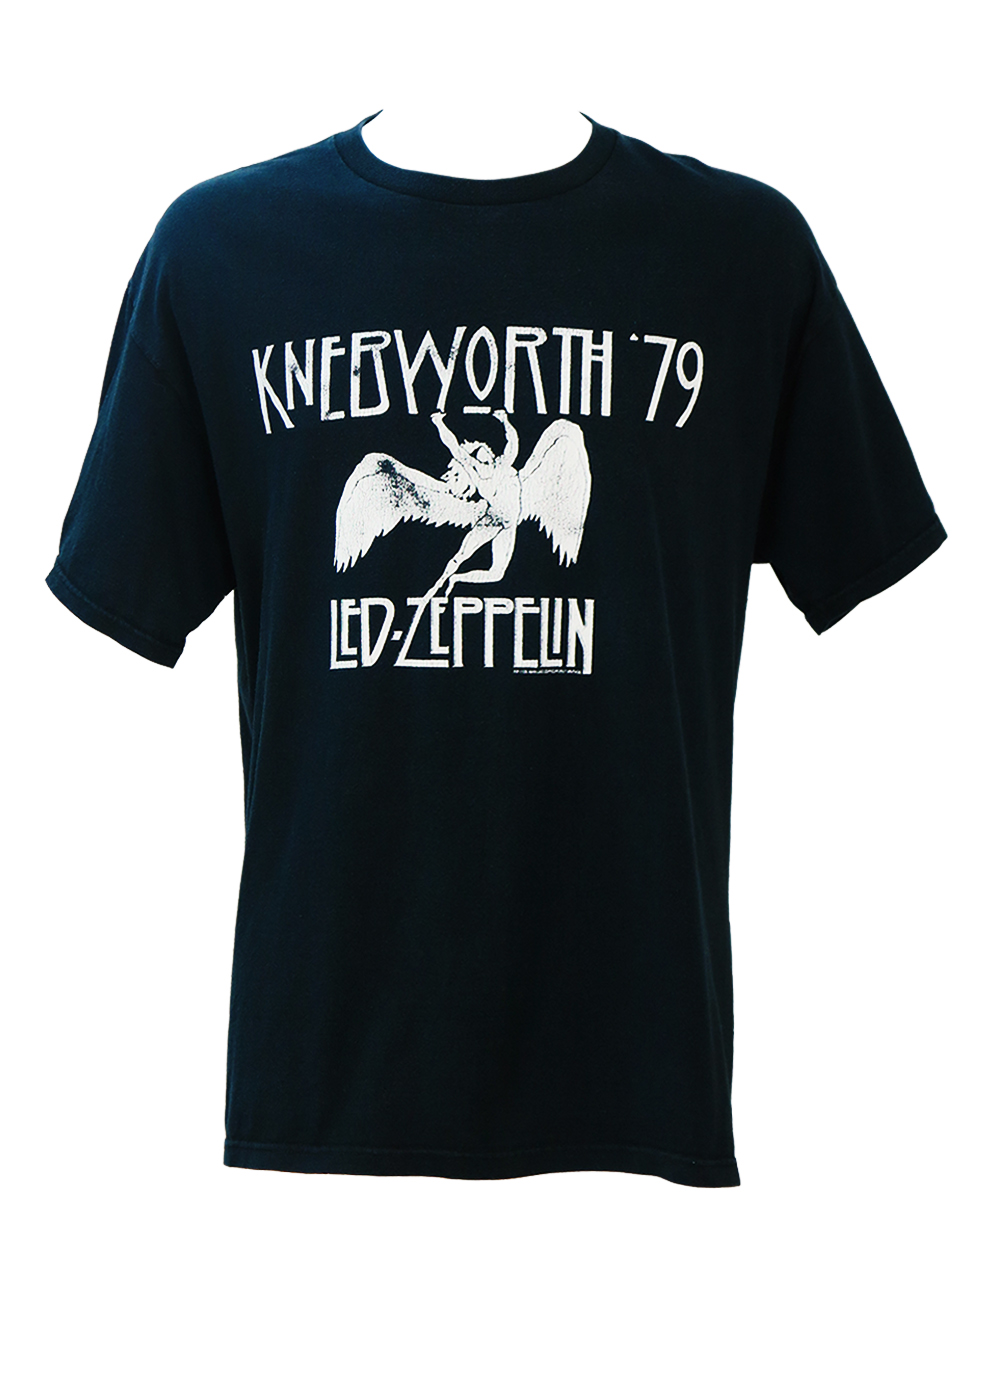 Repro Black & White Knebworth '79 Led Zeppelin T-shirt - XL/XXL | Reign ...